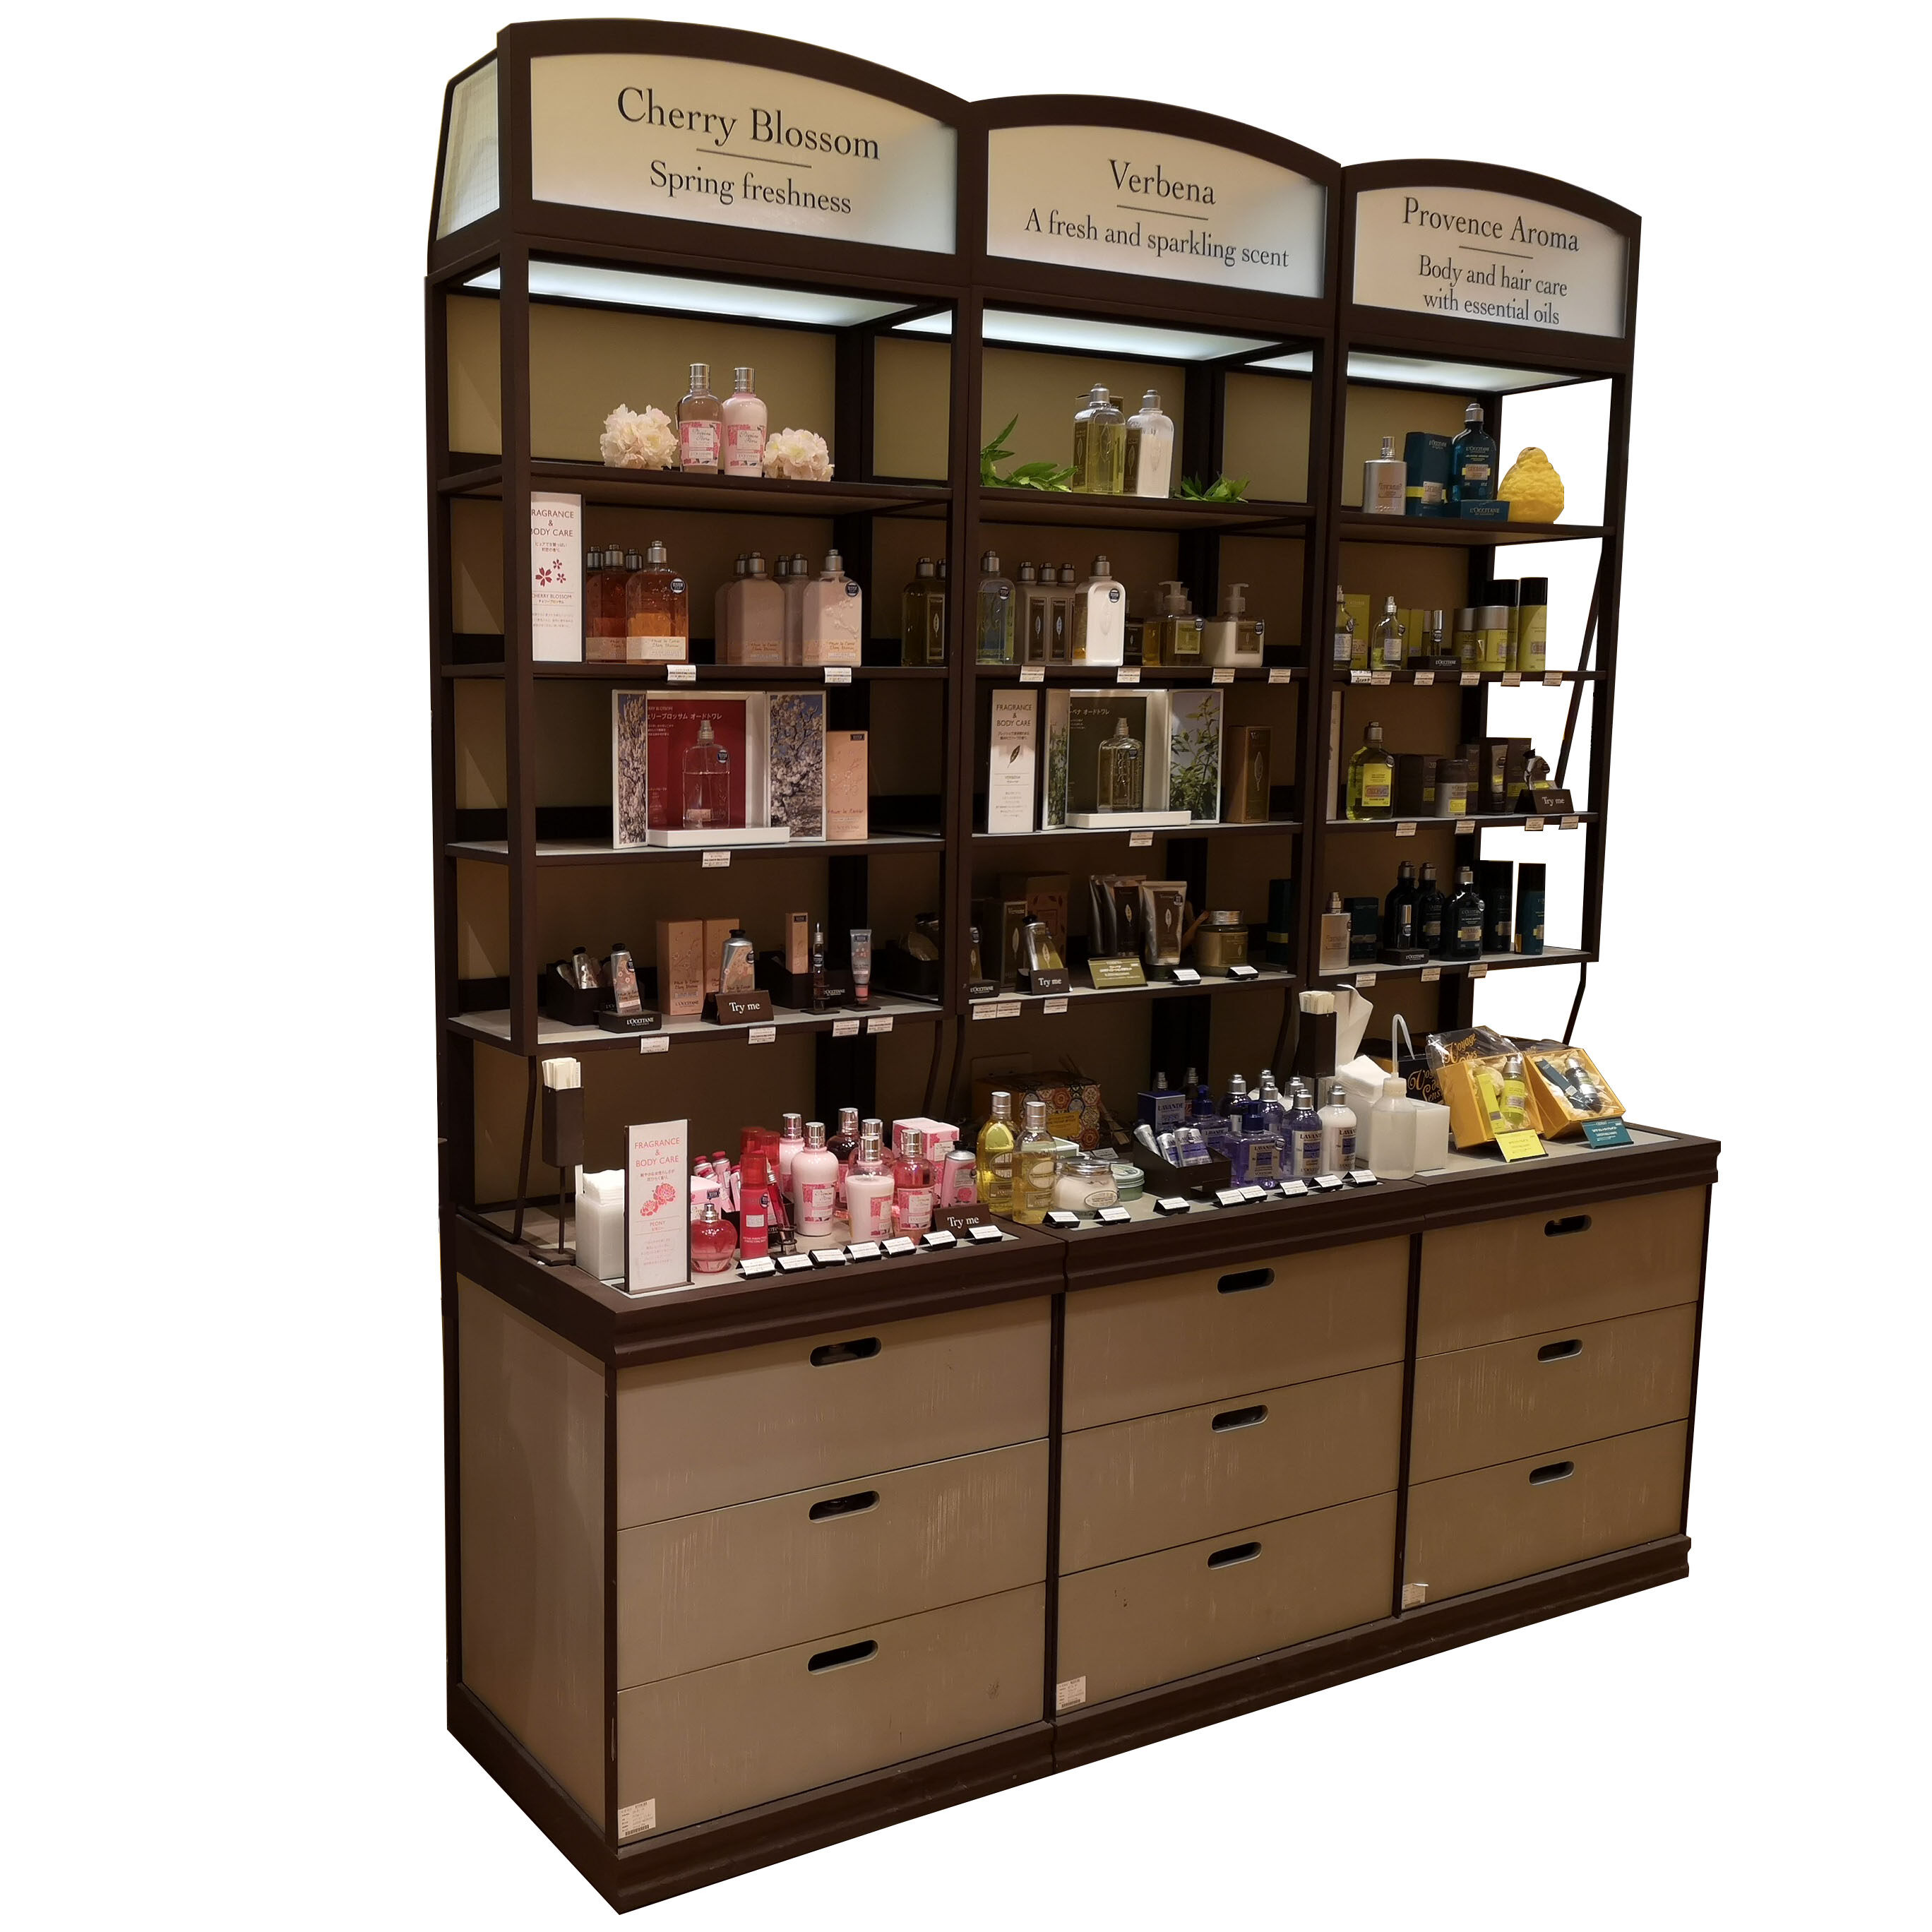 ODM customized cosmetics display counter